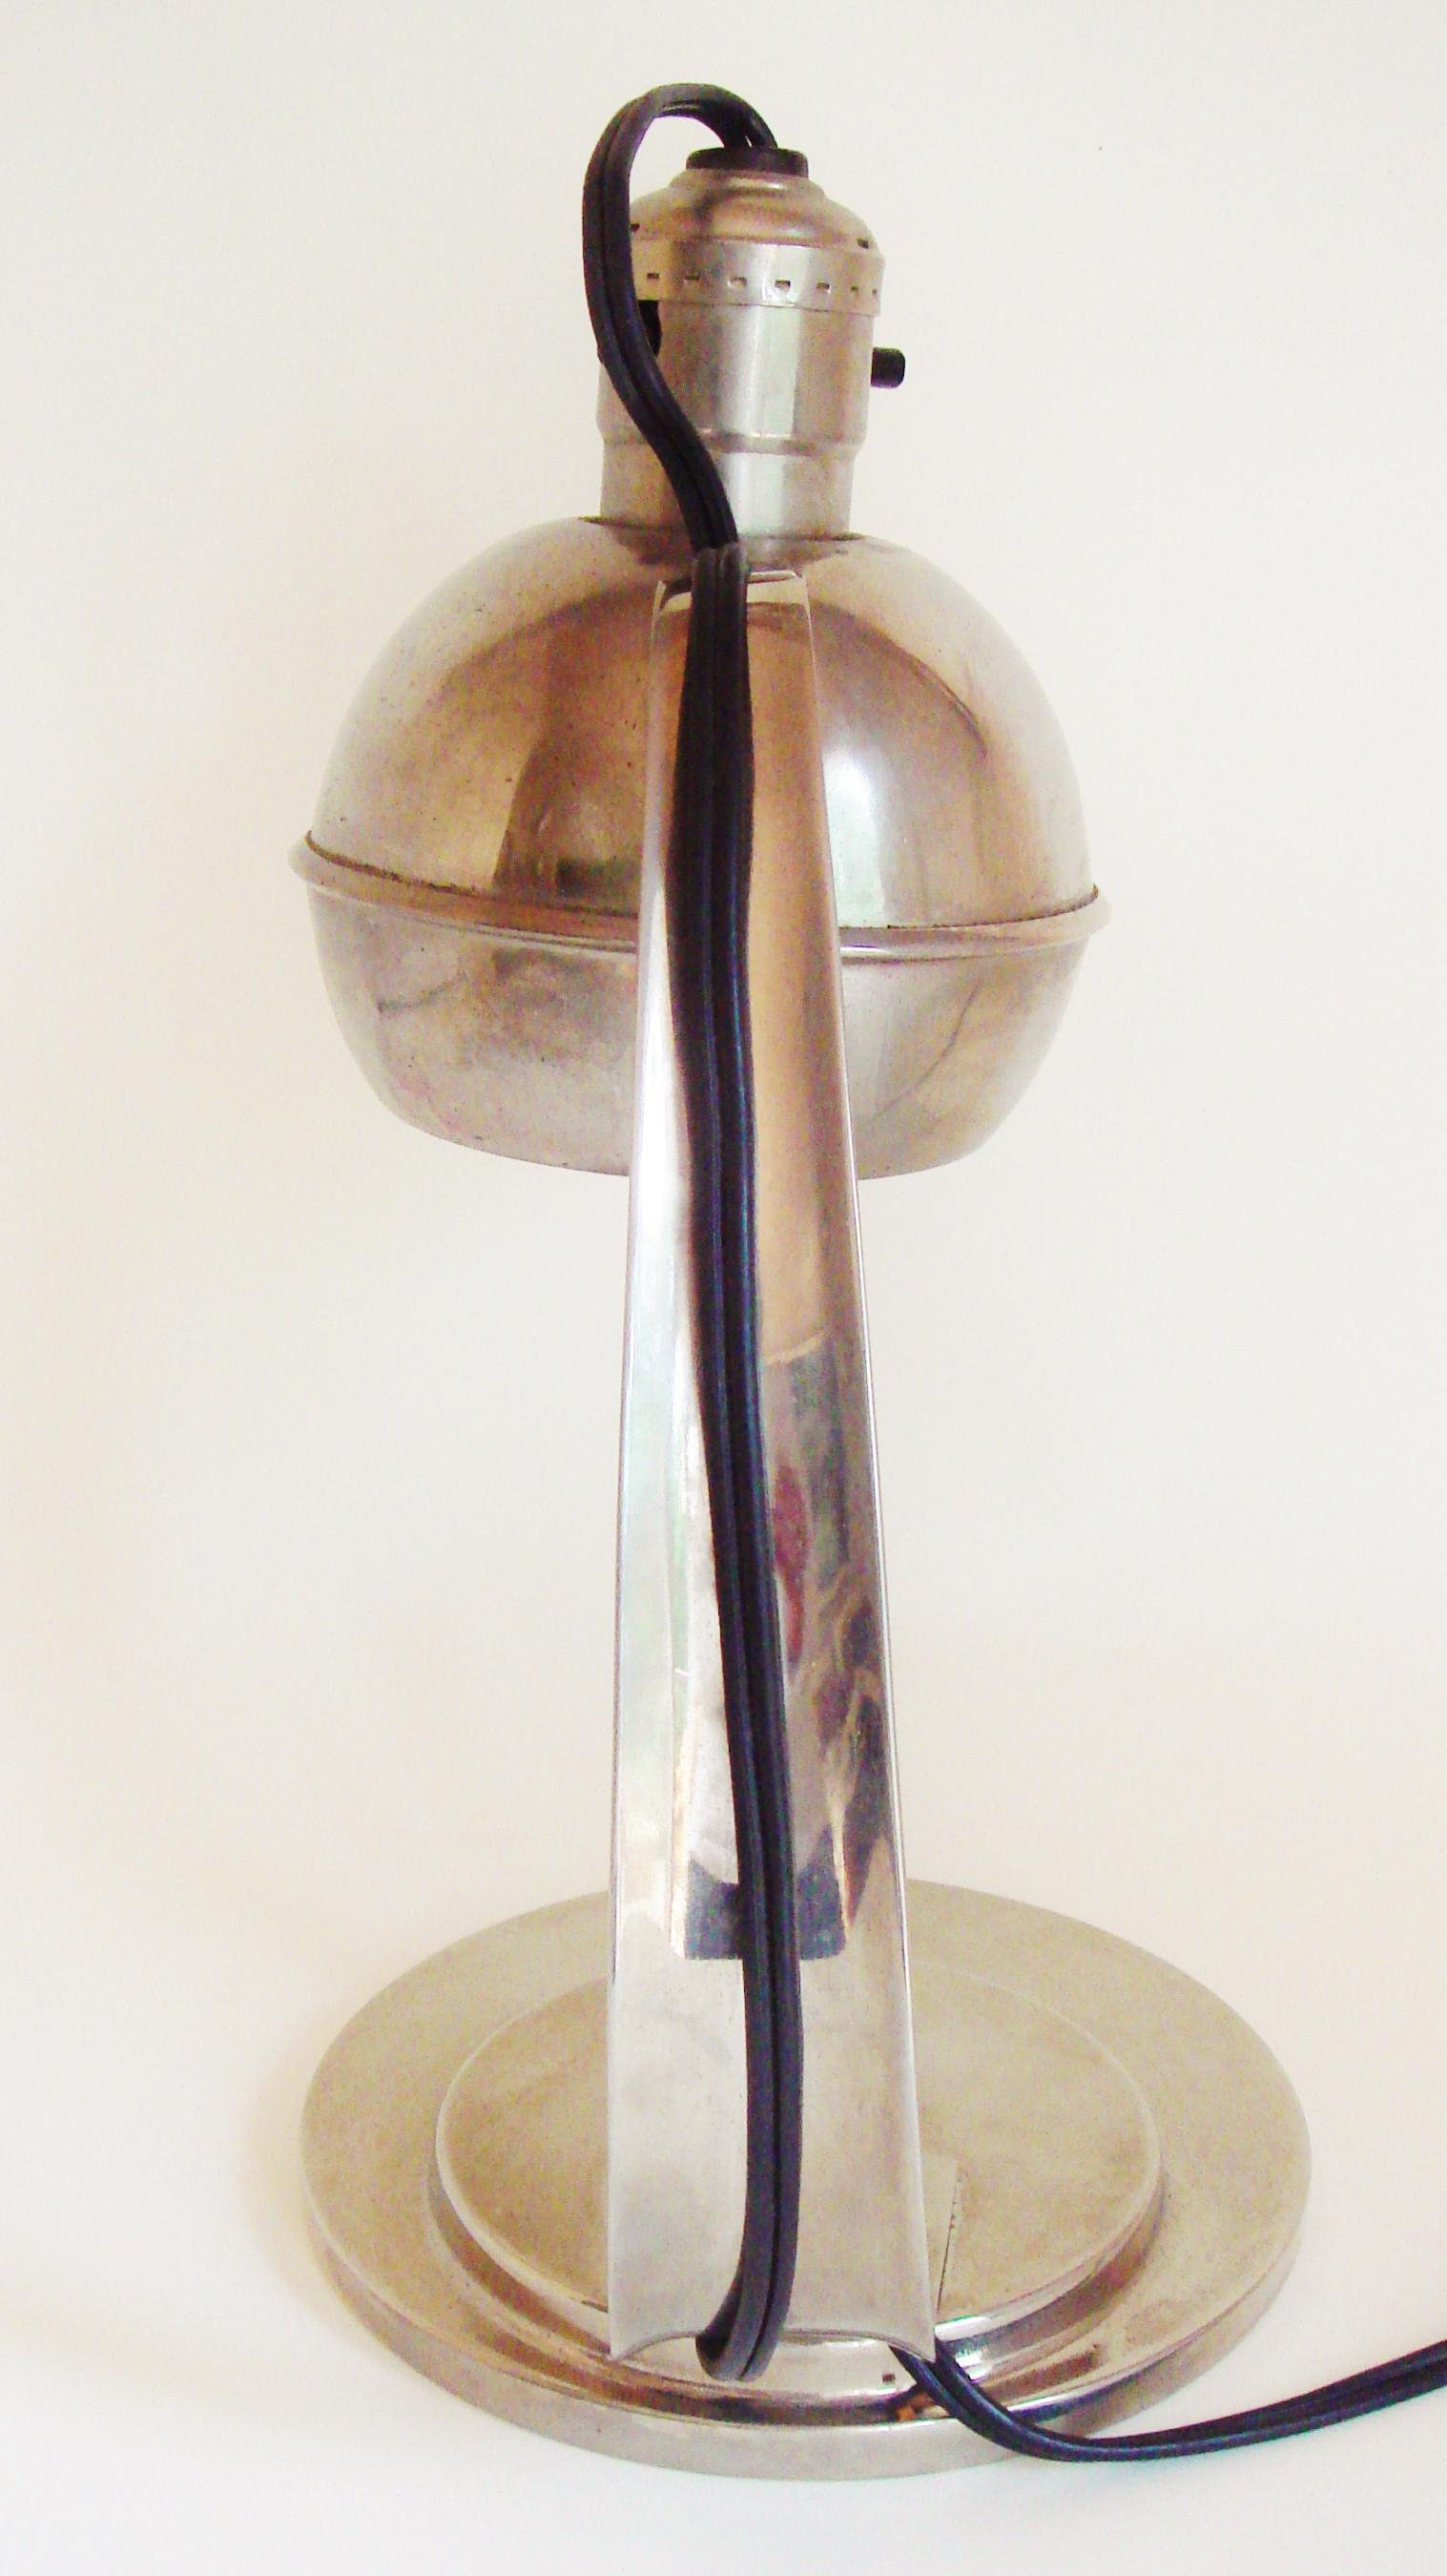 Molded American Art Deco Nickel-Plated Adjustable Desk Lamp with Bakelite Pen Holder For Sale